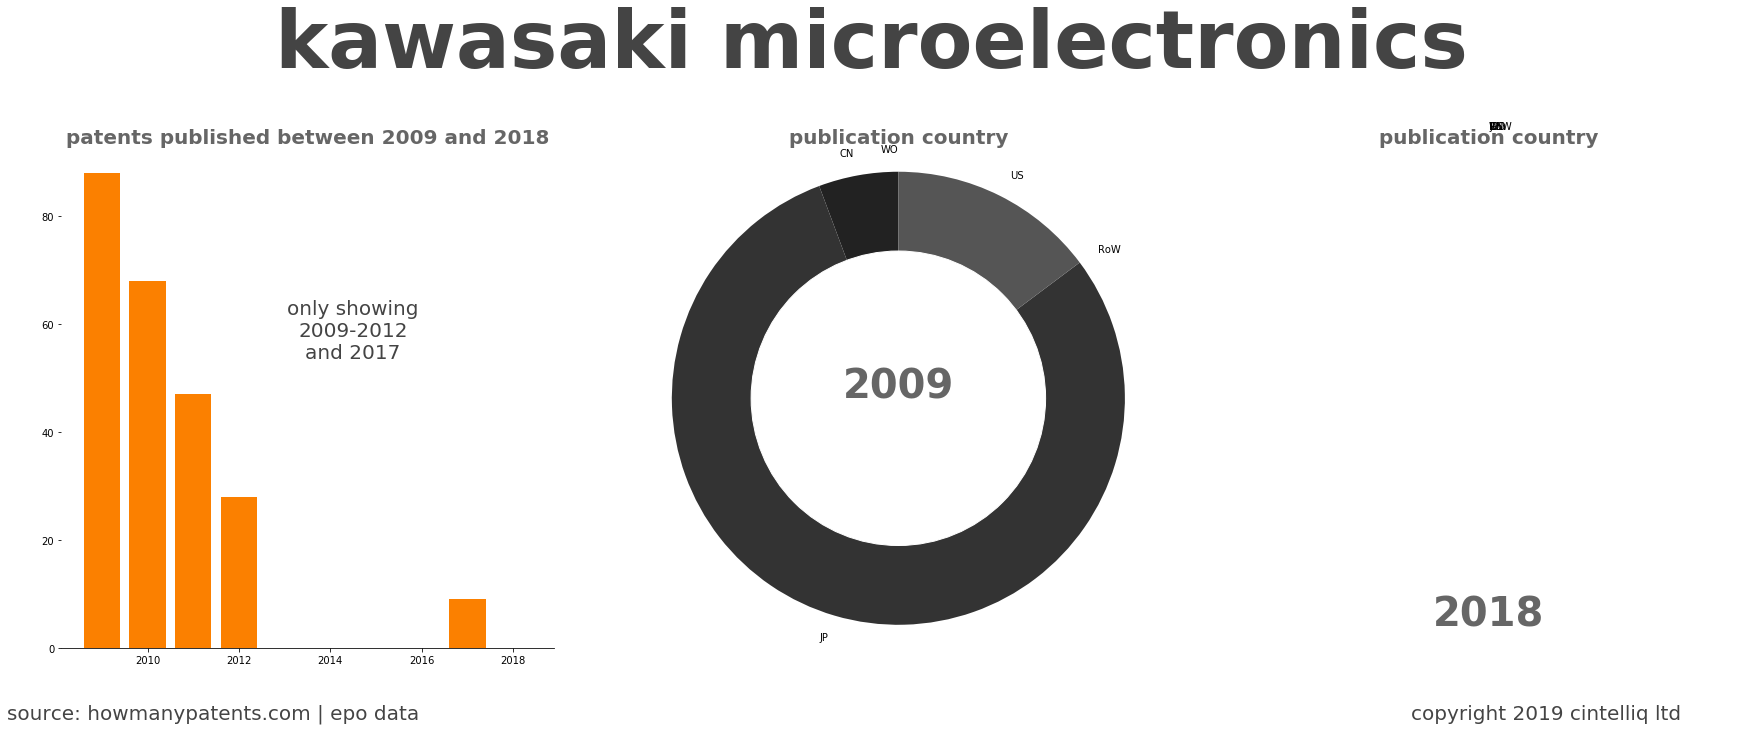 summary of patents for Kawasaki Microelectronics